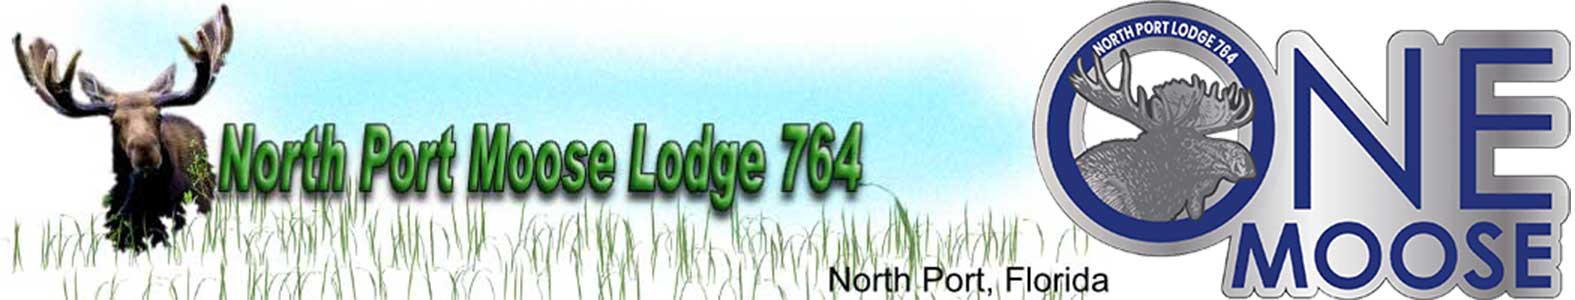 north port moose lodge web logo